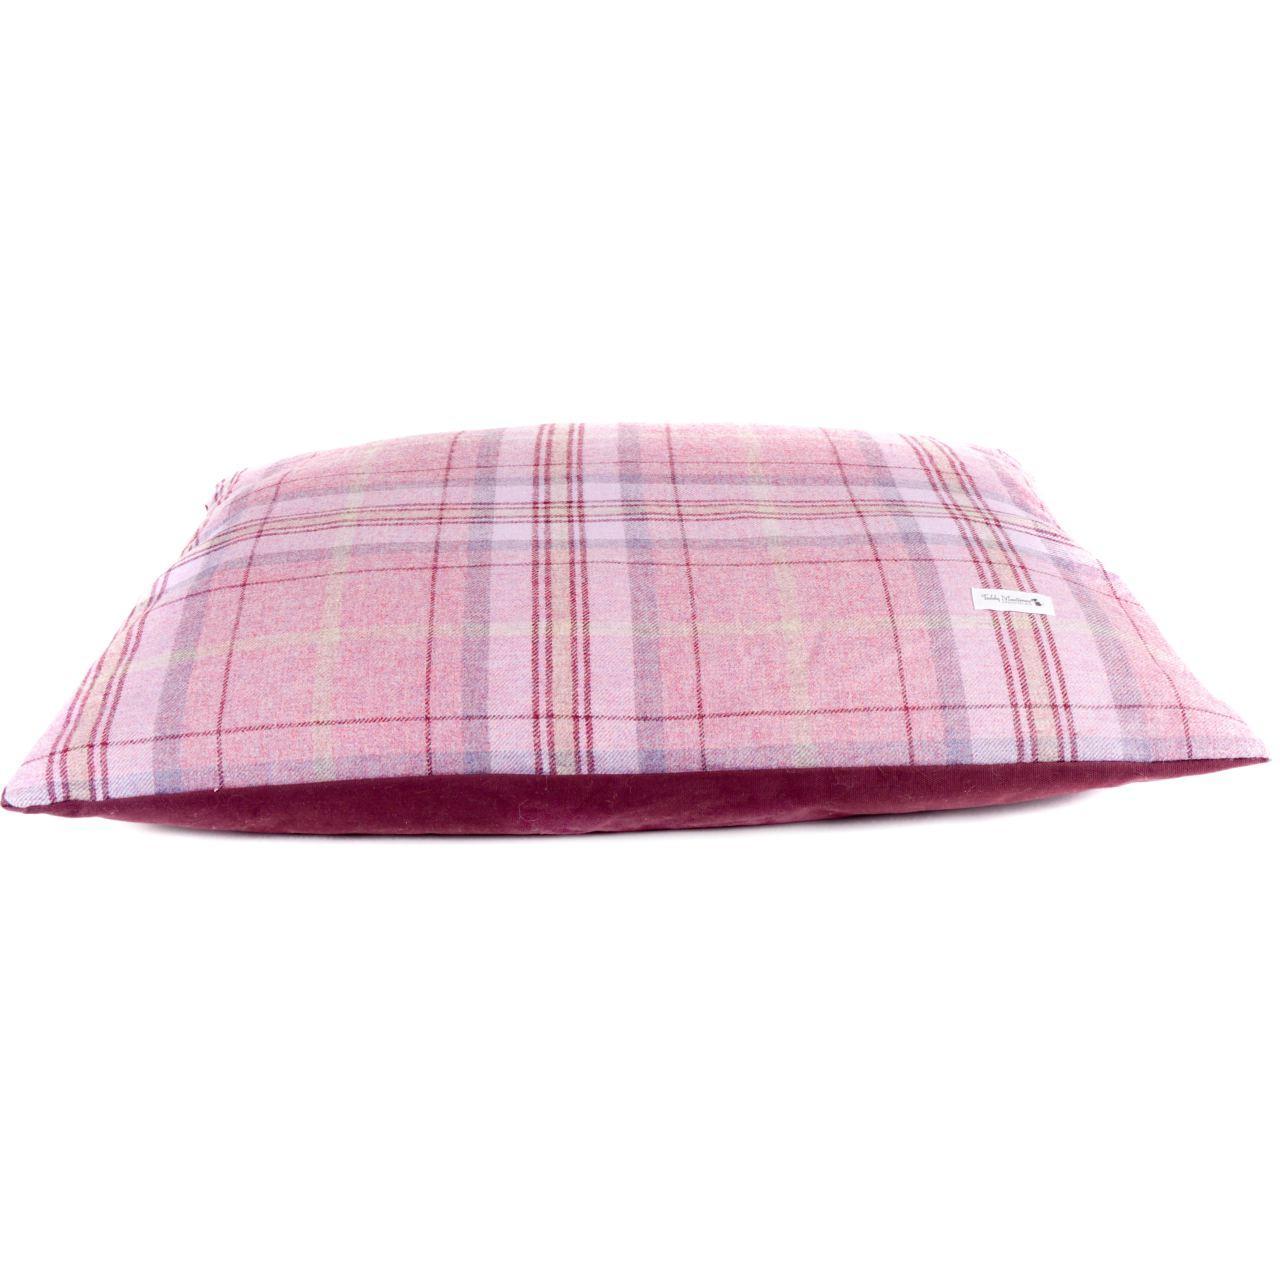 An image of Teddy Maximus Luxury Lounging Cushion Pink Shetland Wool